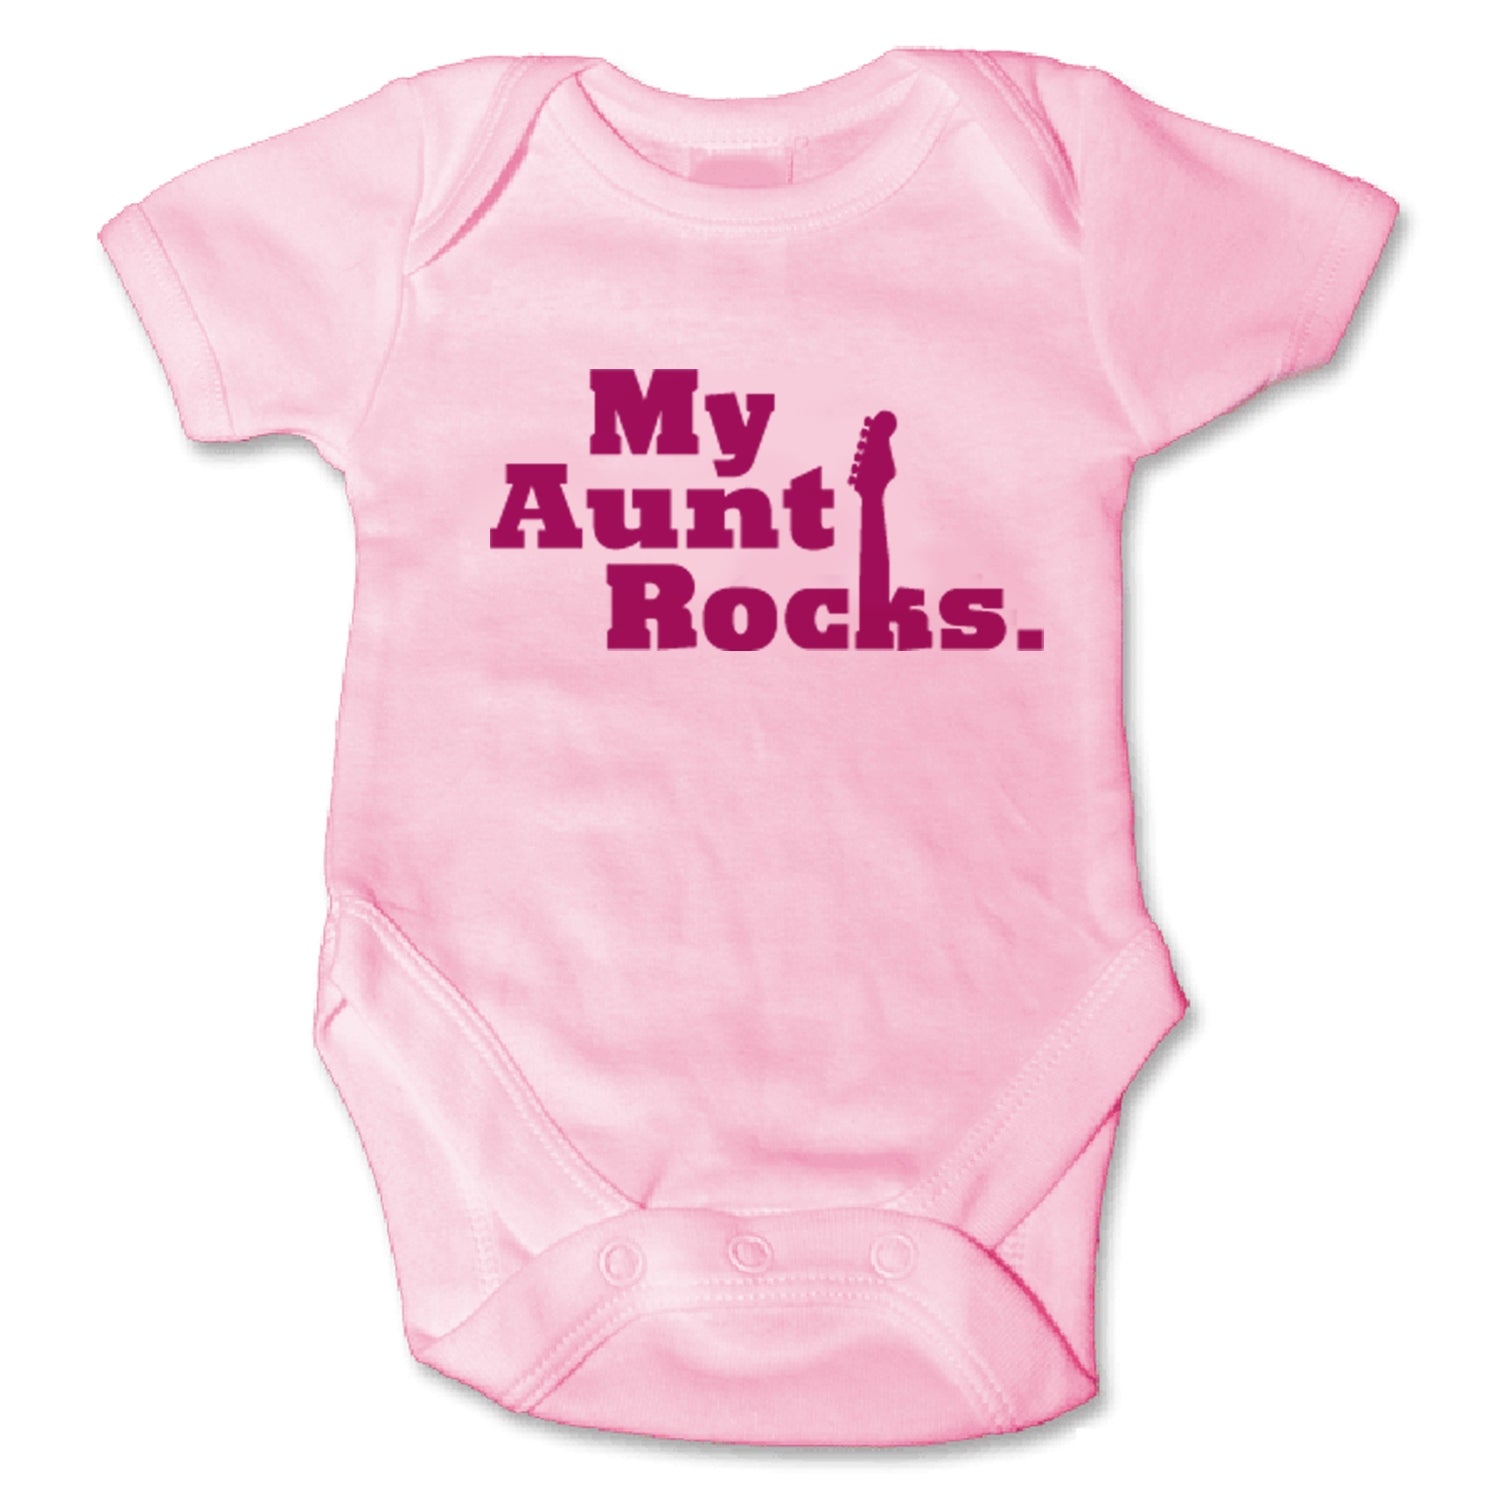 Sol Baby Original 'My Aunt Rocks' Pink Bodysuit